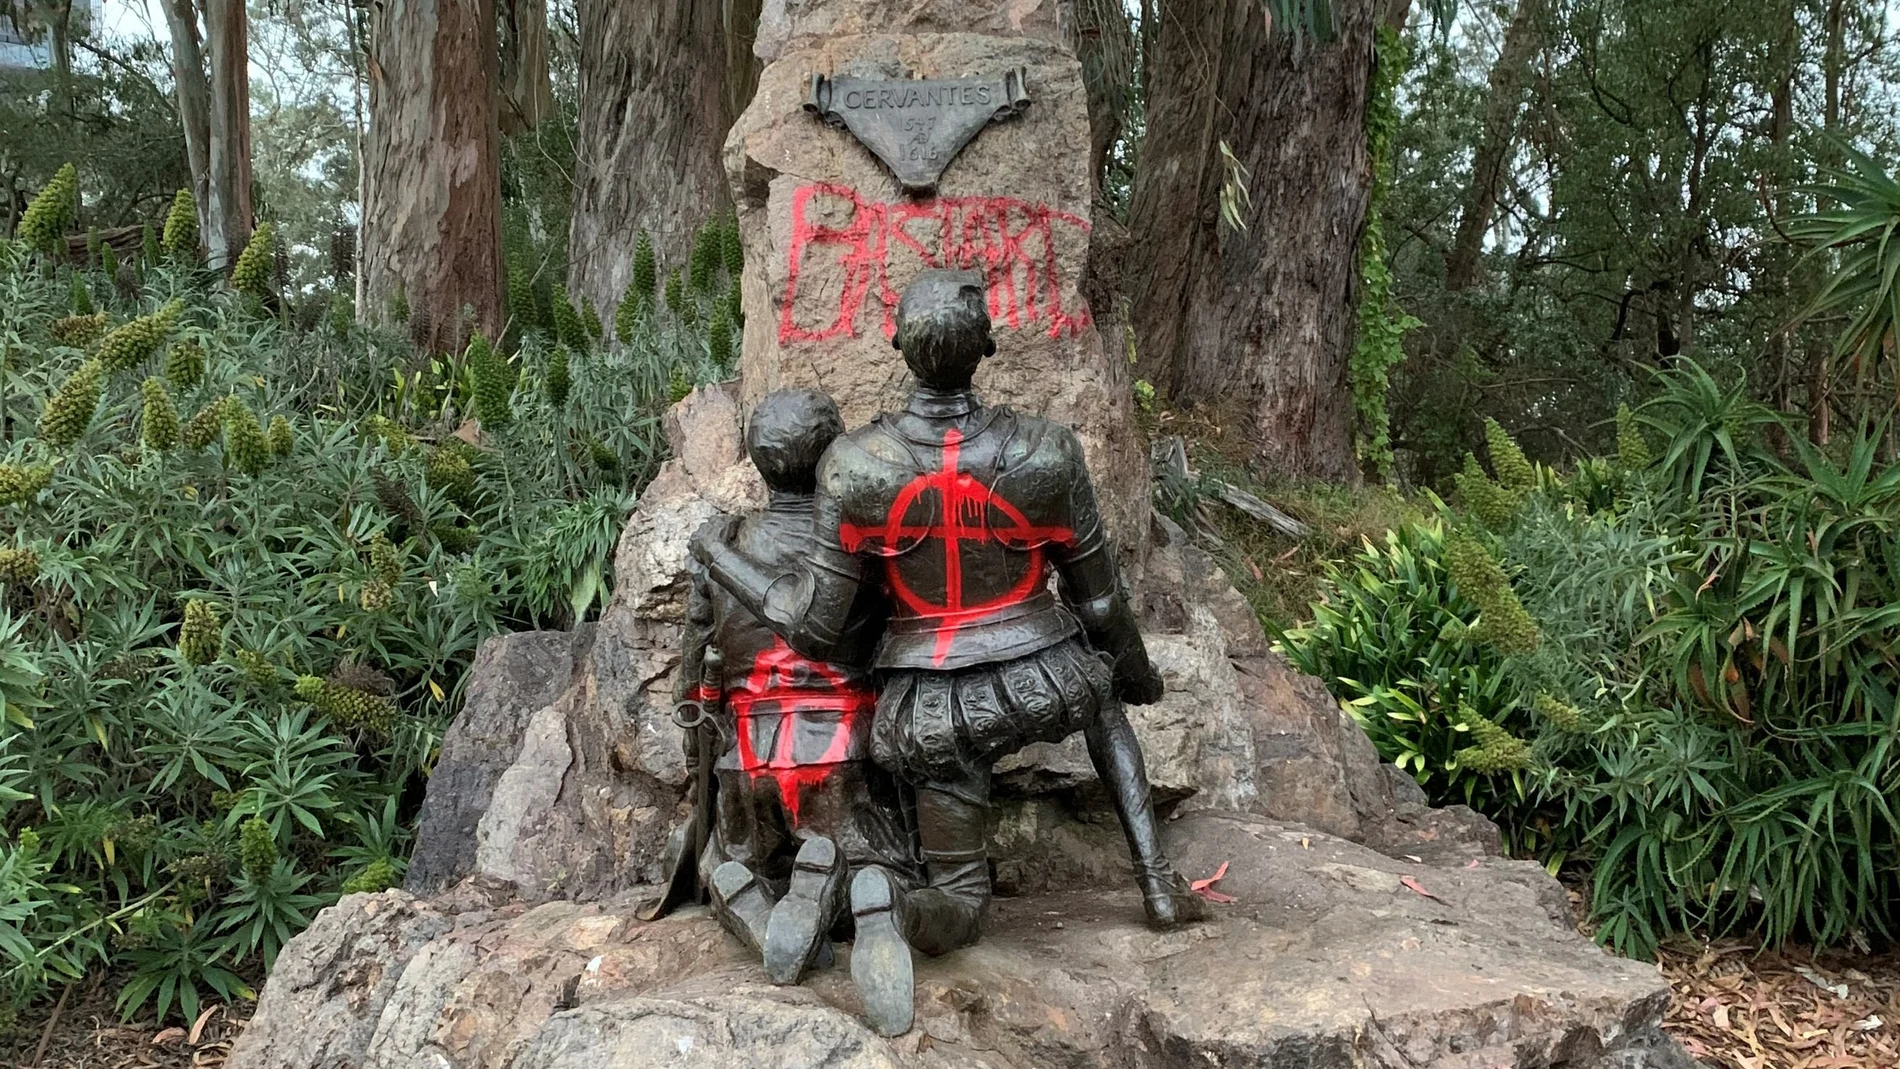 Miguel De Cervantes memorial is vandalised with red spray paint, in San Francisco, California